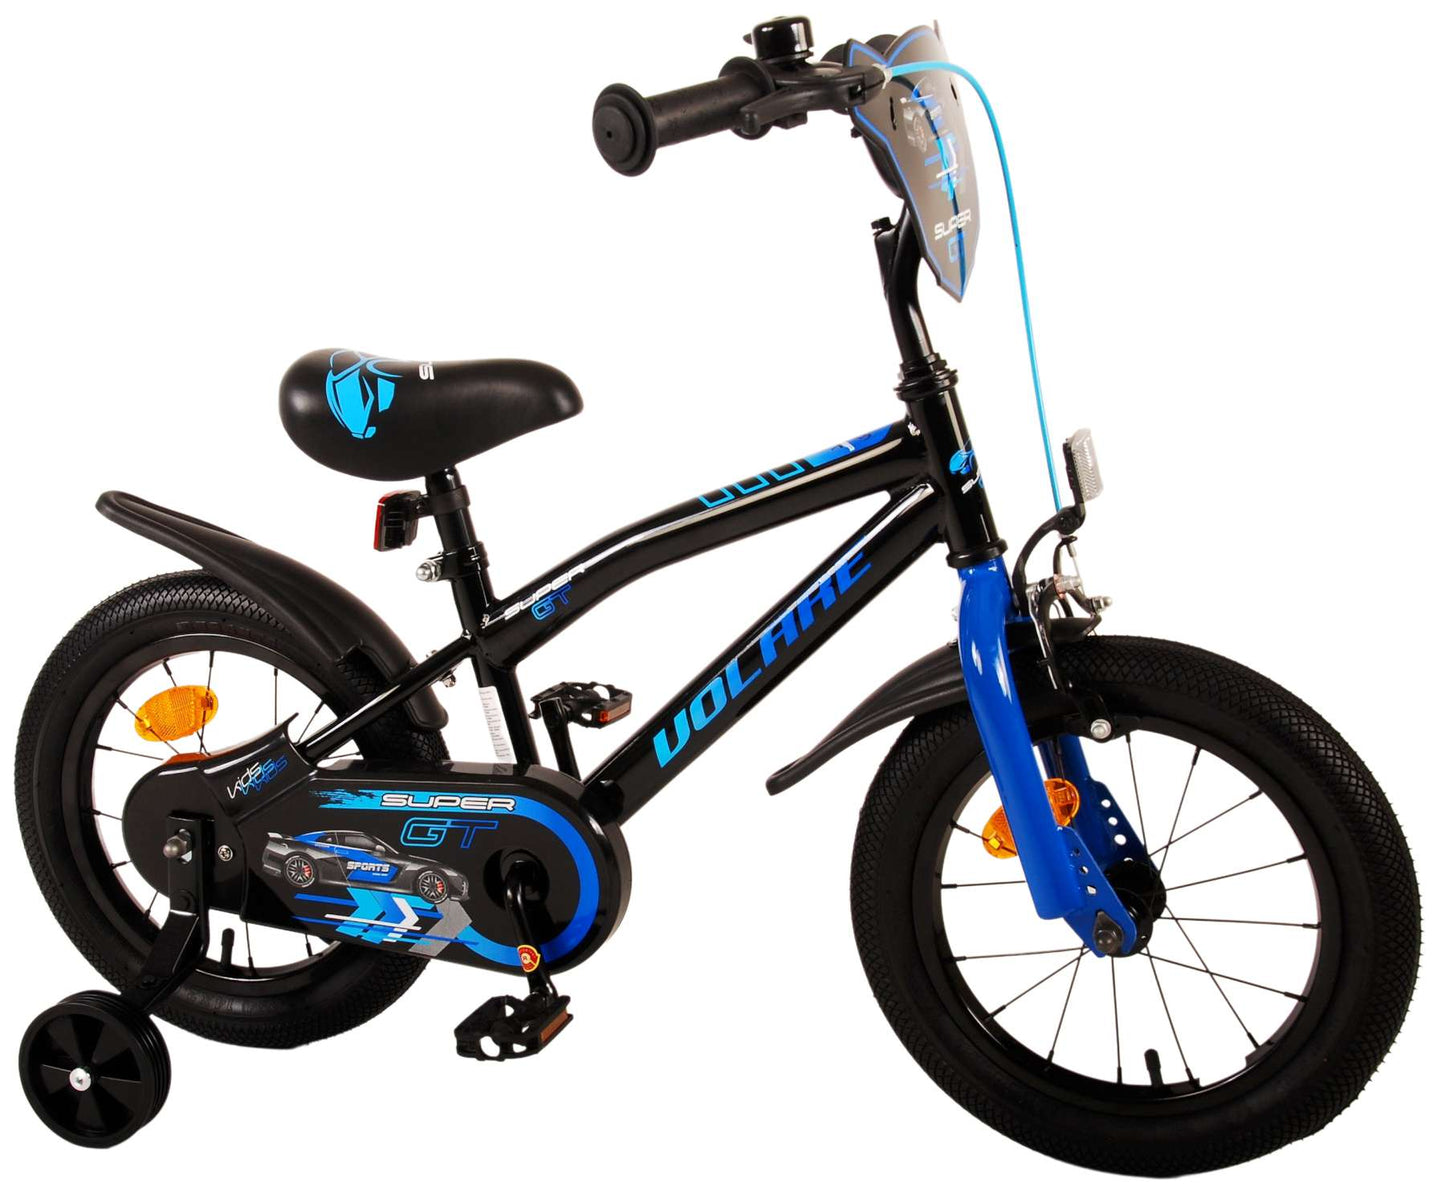 Bike per bambini di Vlatare Super GT - Boys - 14 pollici - Blu